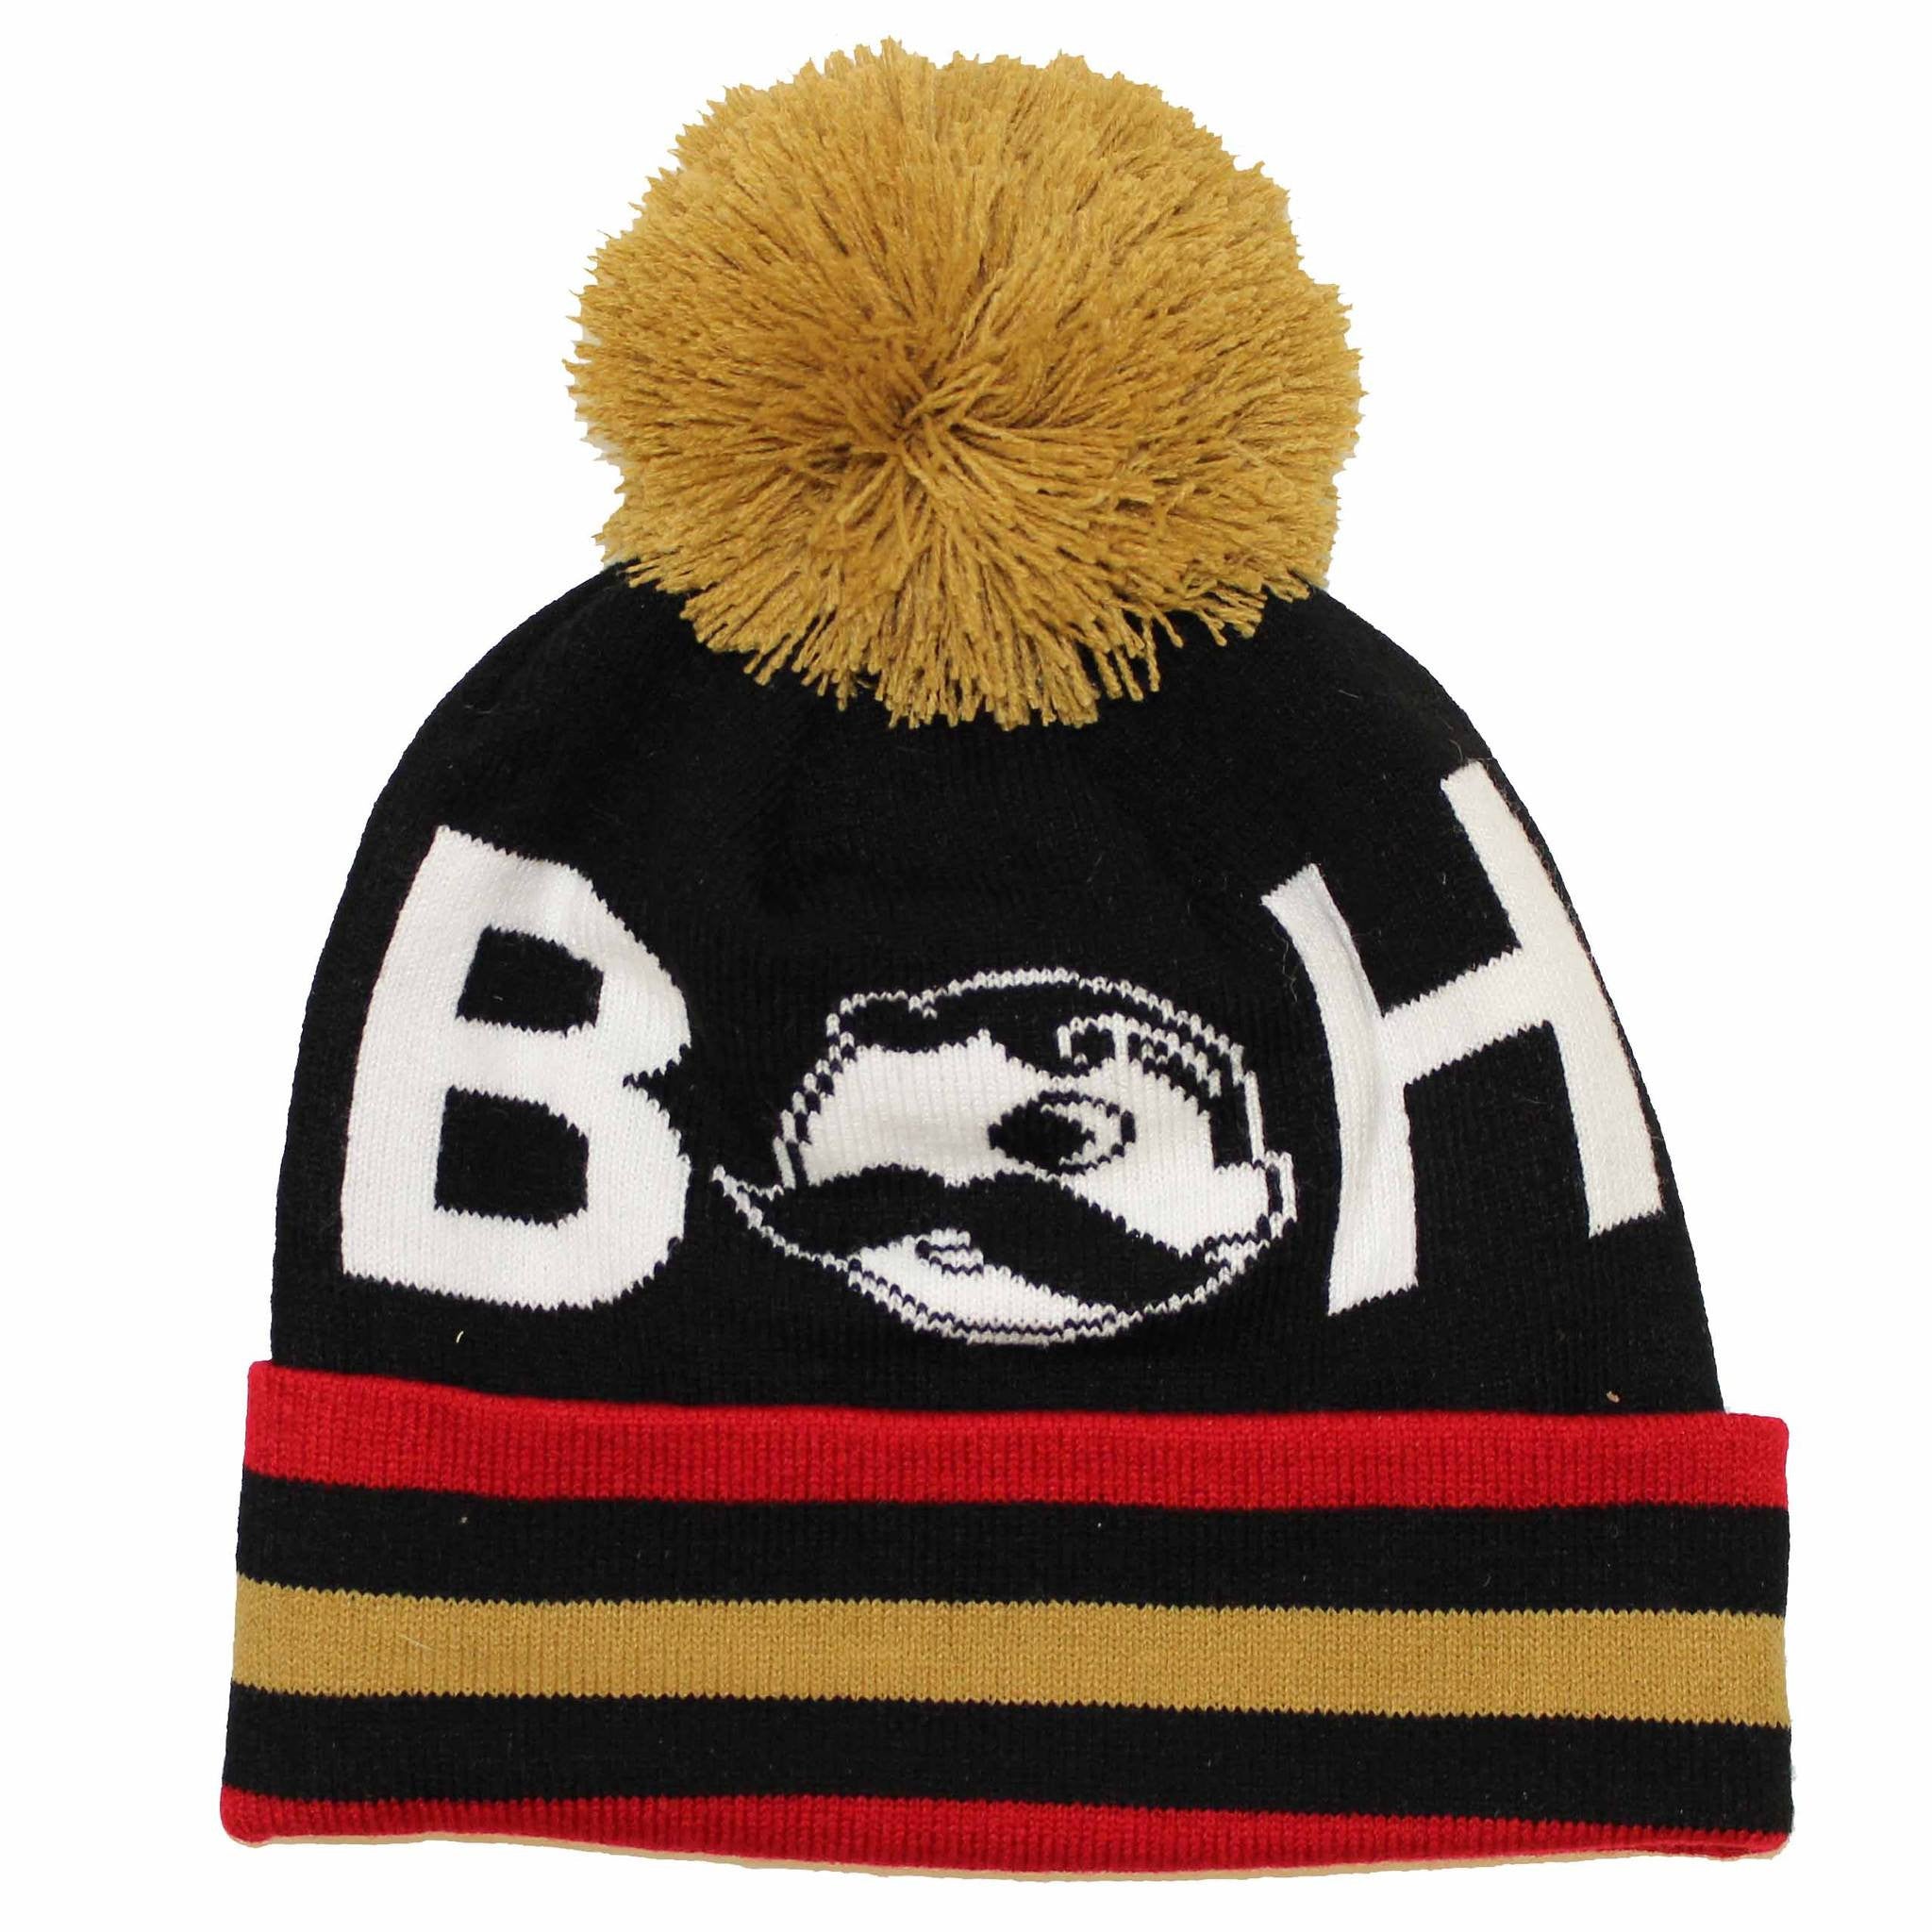 Boh Logo Text (Black w/ Gold Pom) / Knit Beanie Cap - Route One Apparel